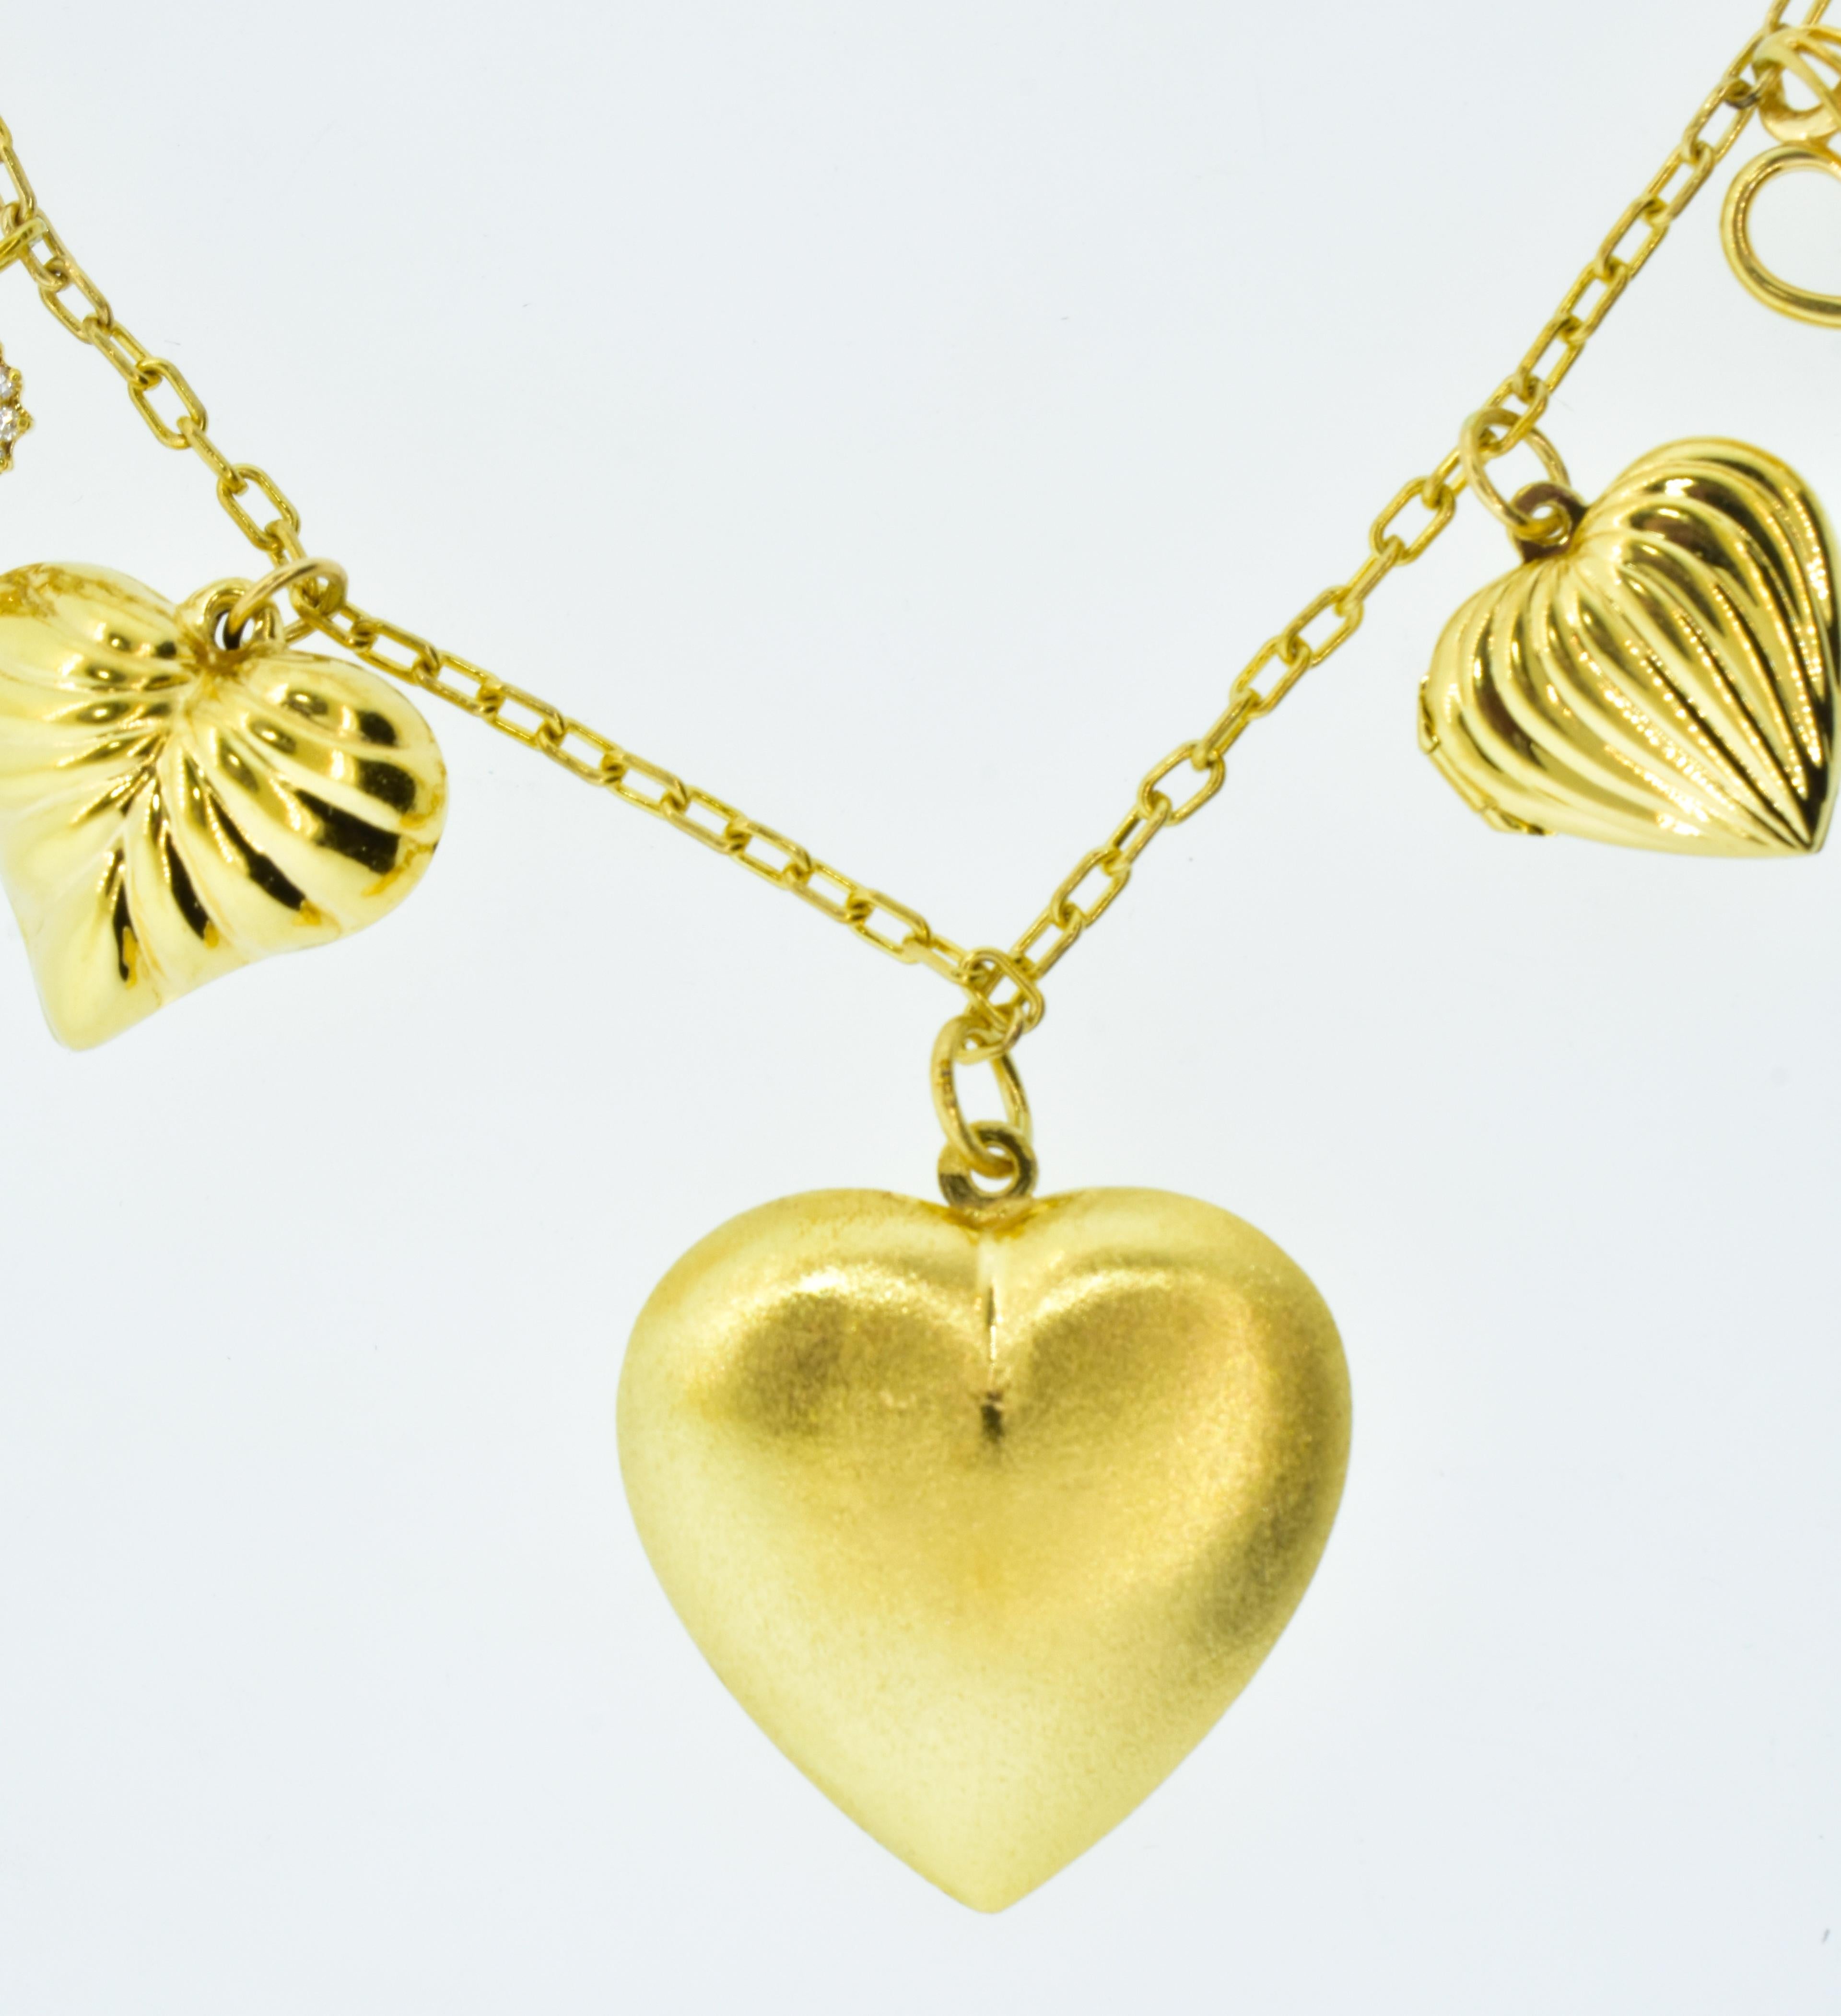 Brilliant Cut Heart Motif Gold and Diamond Dangling Necklace, circa 1960